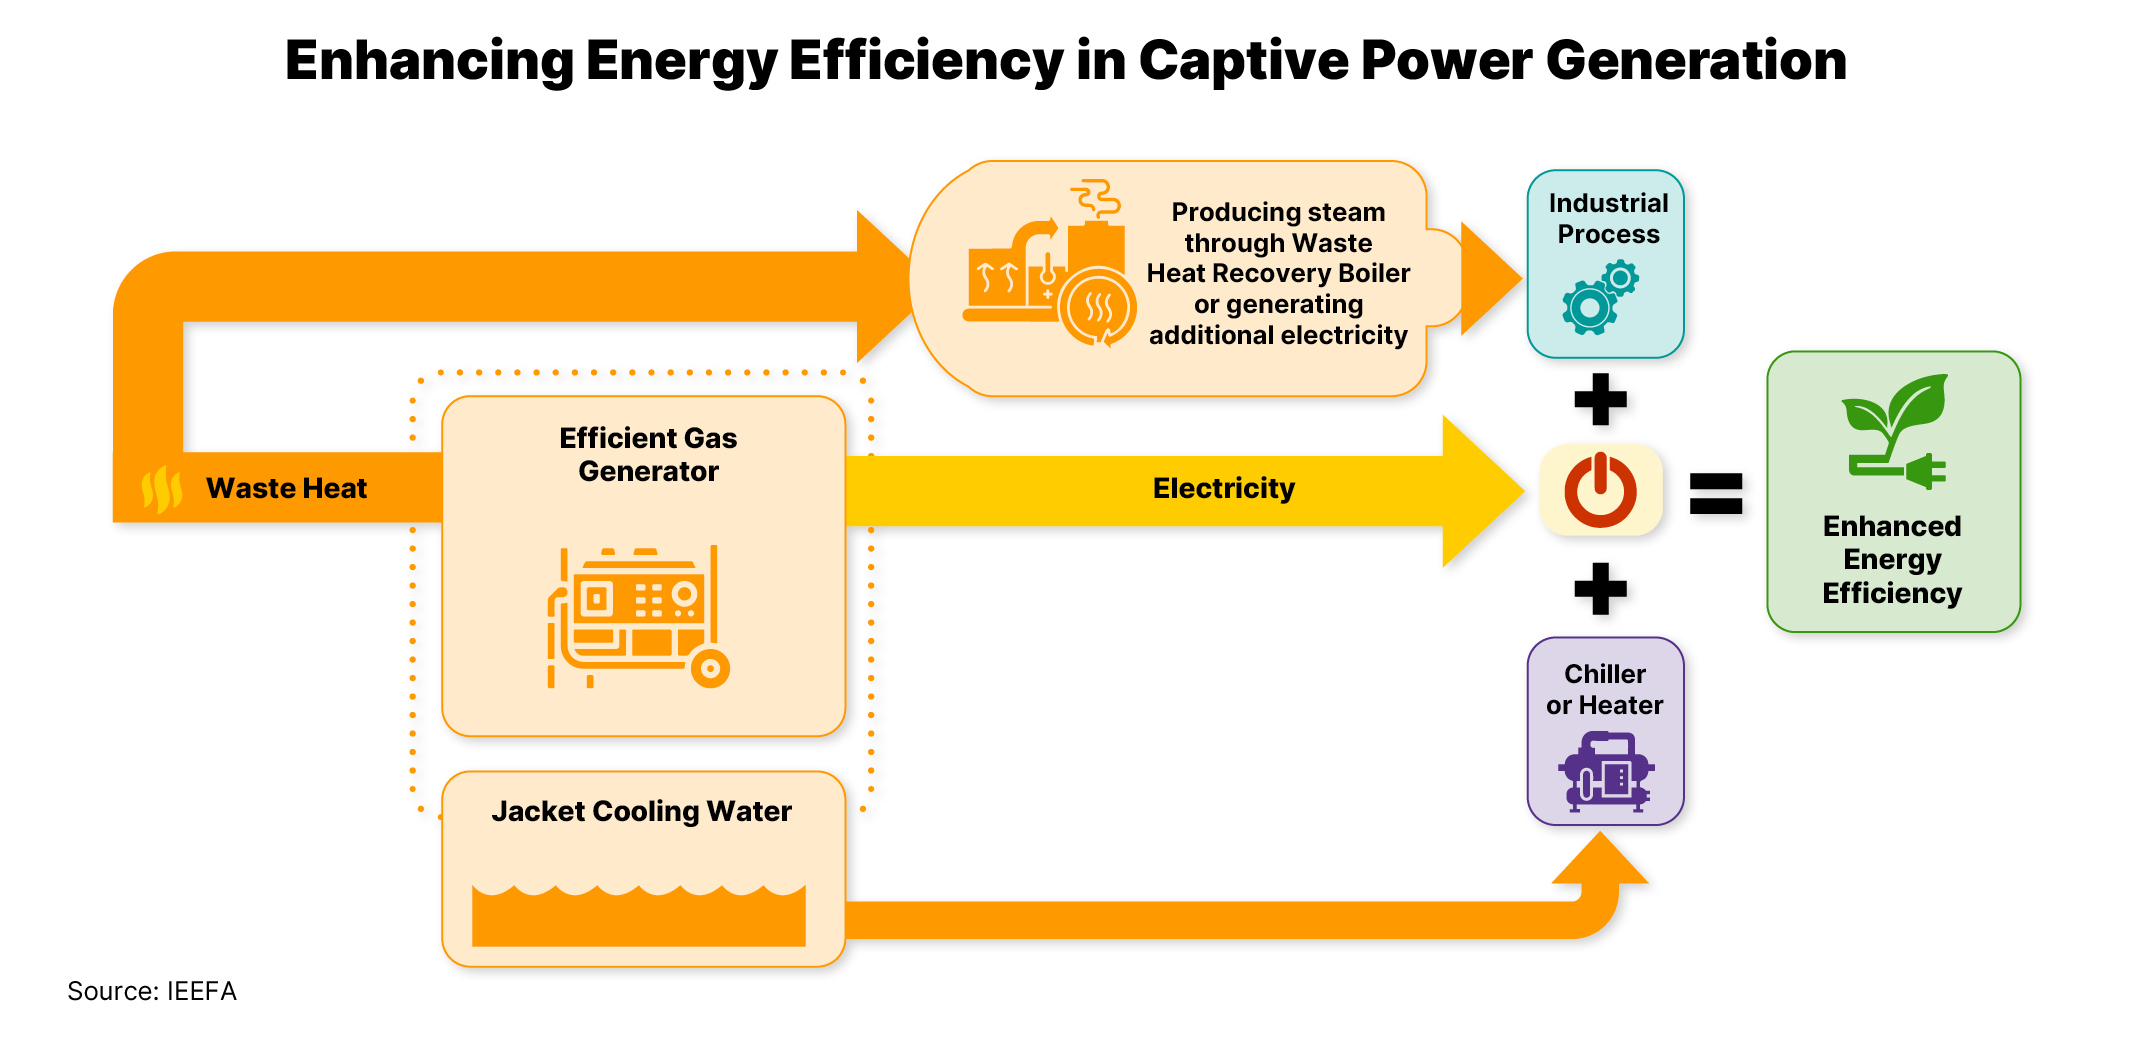 Enhancing energy efficiency in captive power generation